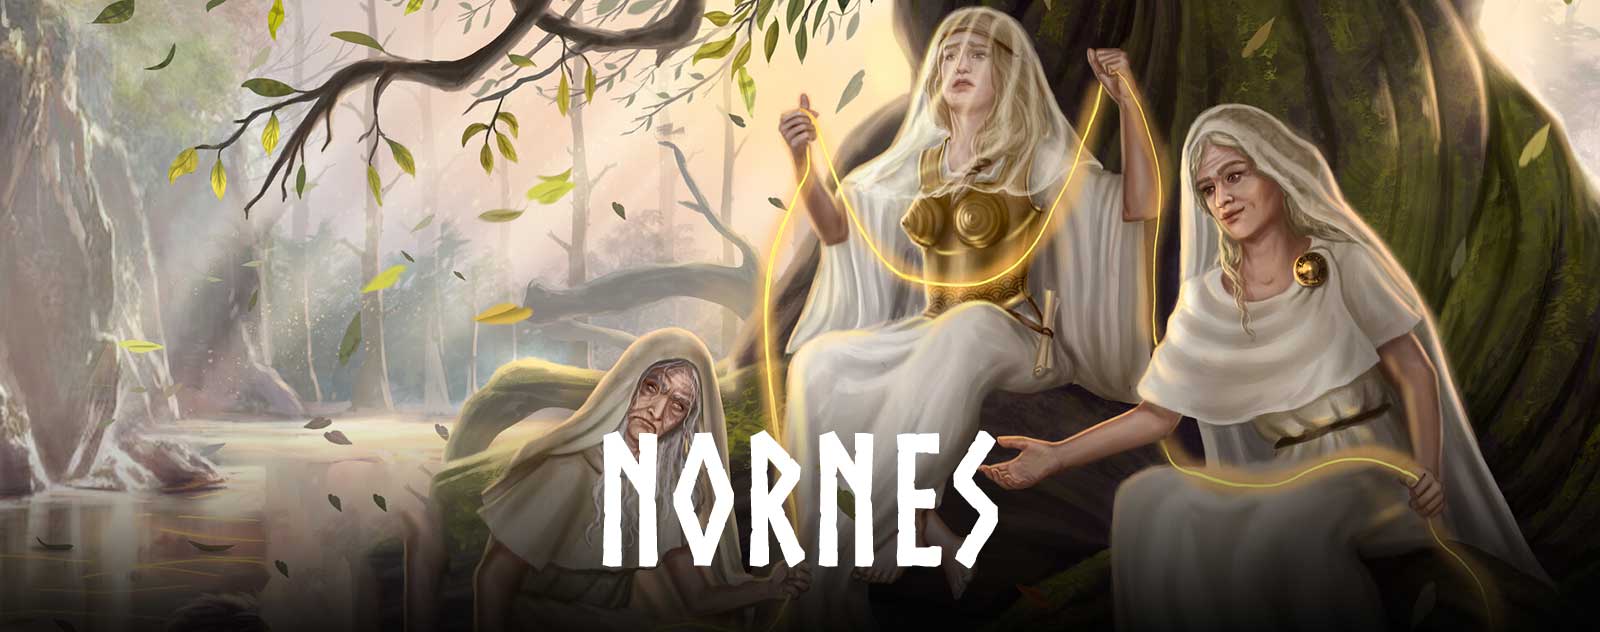 Nornes